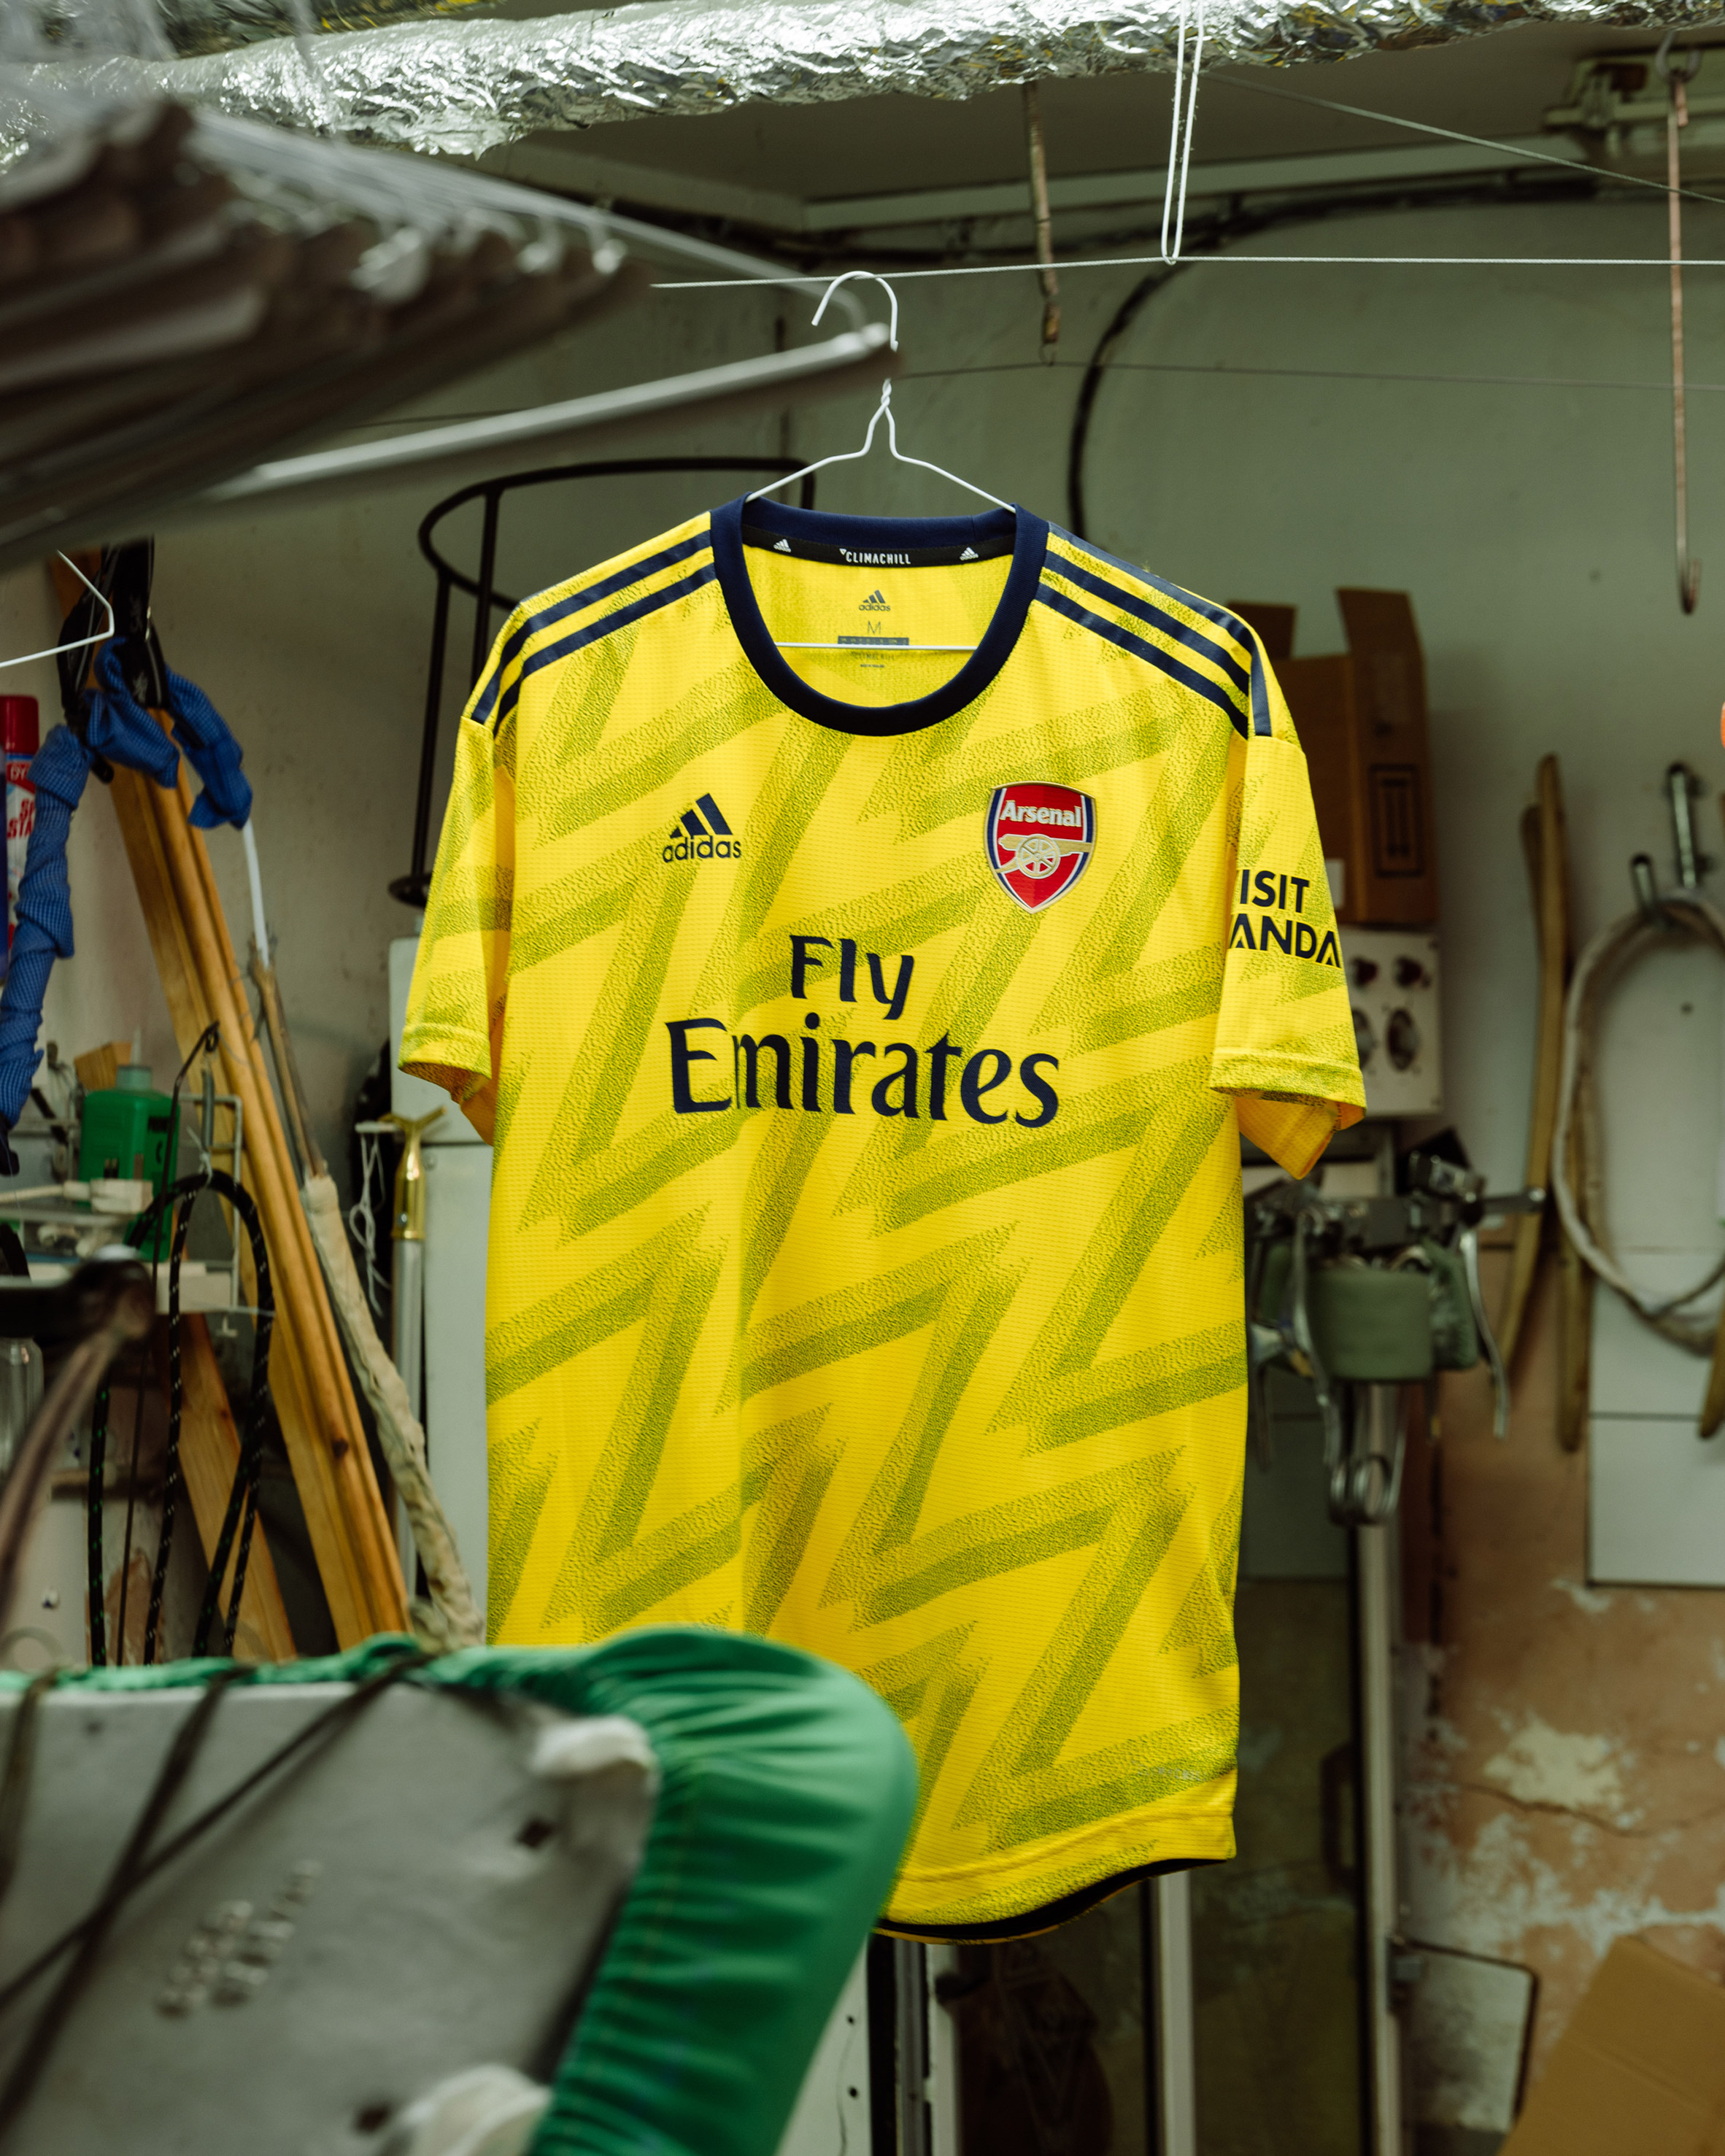 Adidas revives iconic "bruised banana" shirt for Arsenal away